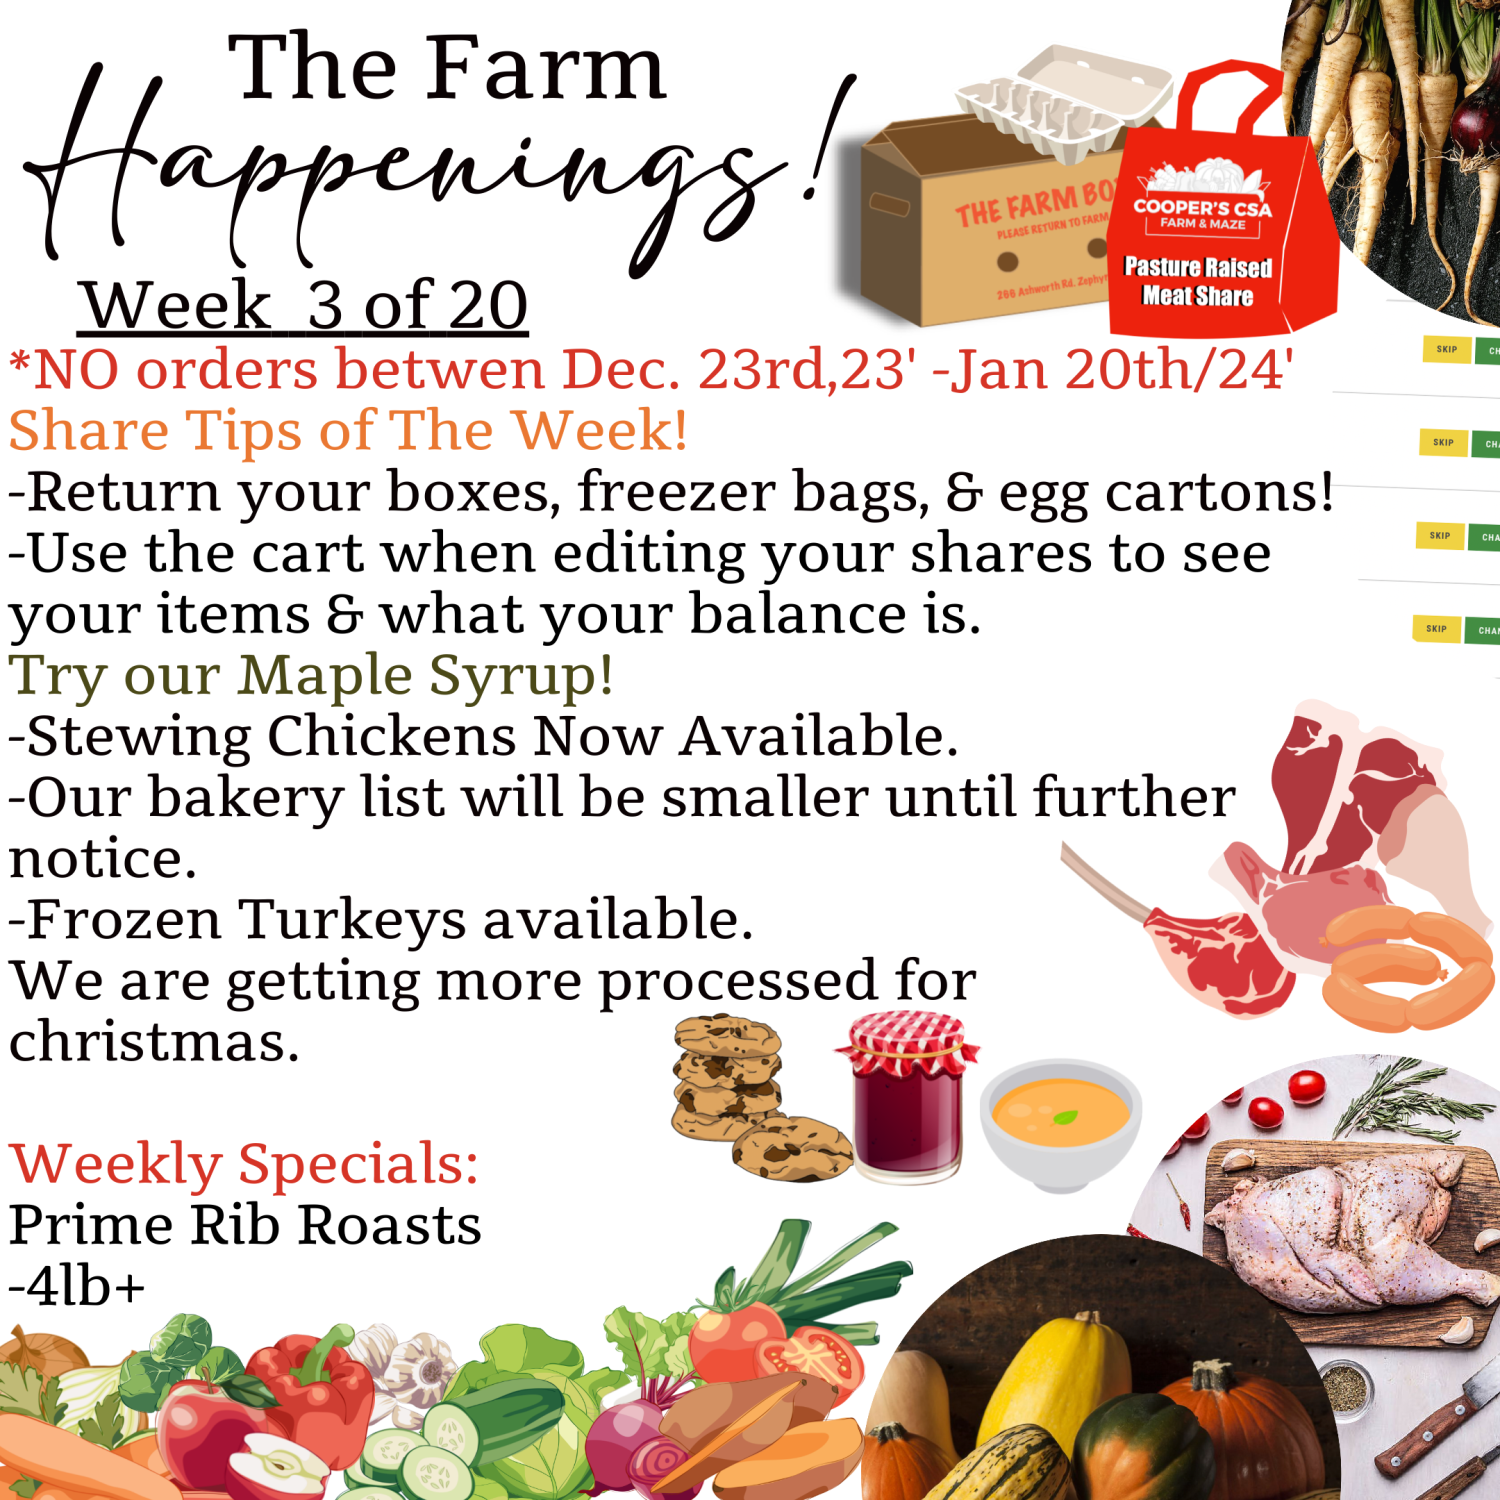 Previous Happening: "The Farm Box"-Coopers CSA Farm Farm Happenings November 28th-Dec.2nd